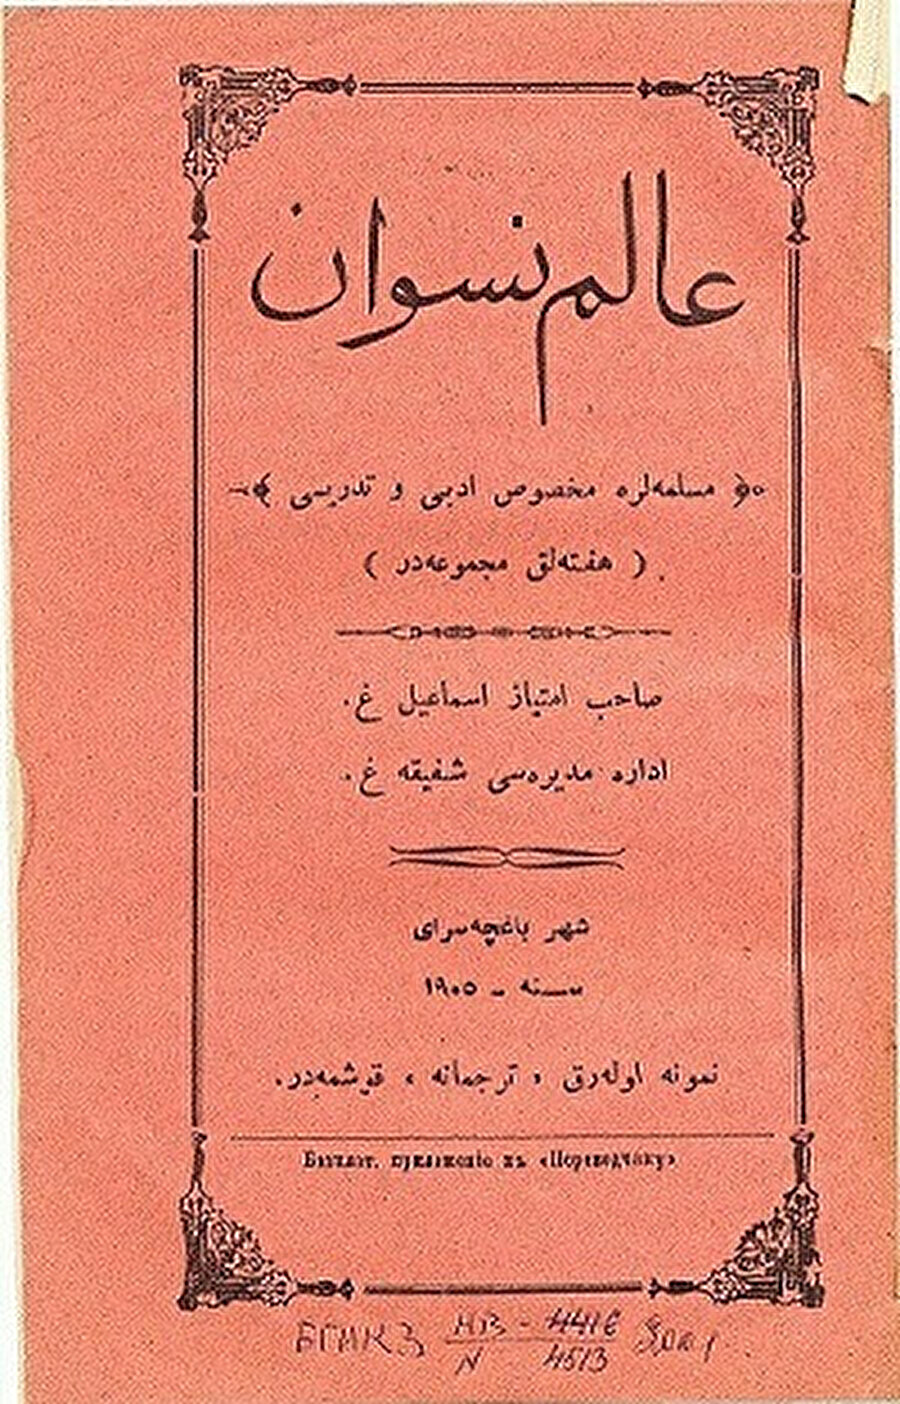 Alem-i Nisvan dergisinin kapağı. (1906-1912)